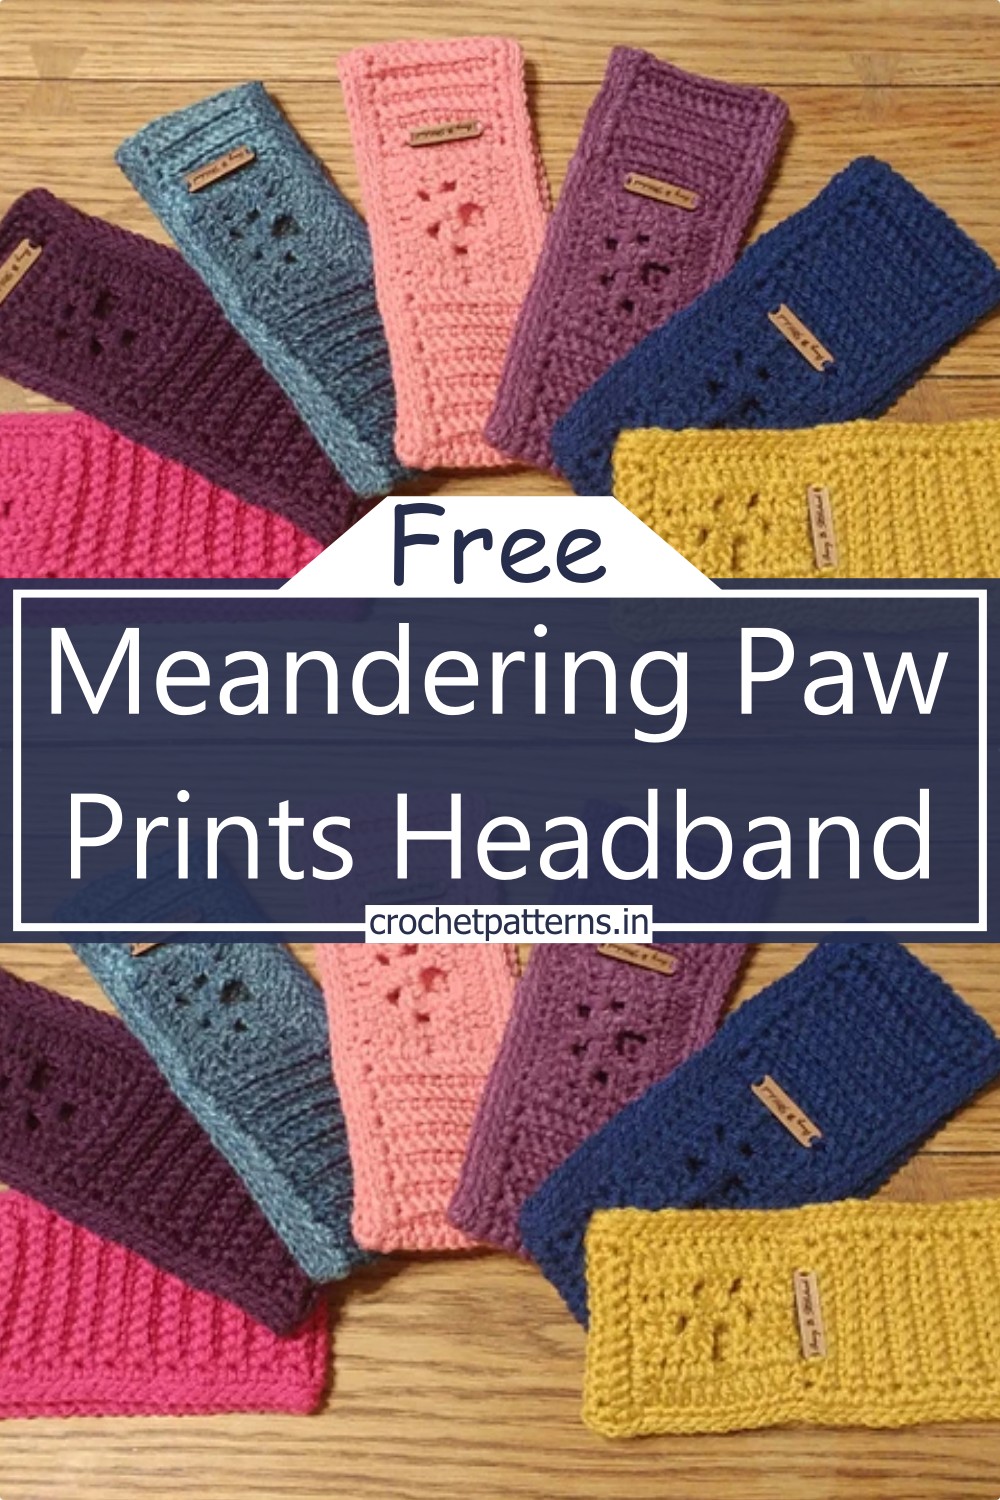 Meandering Paw Prints Headband